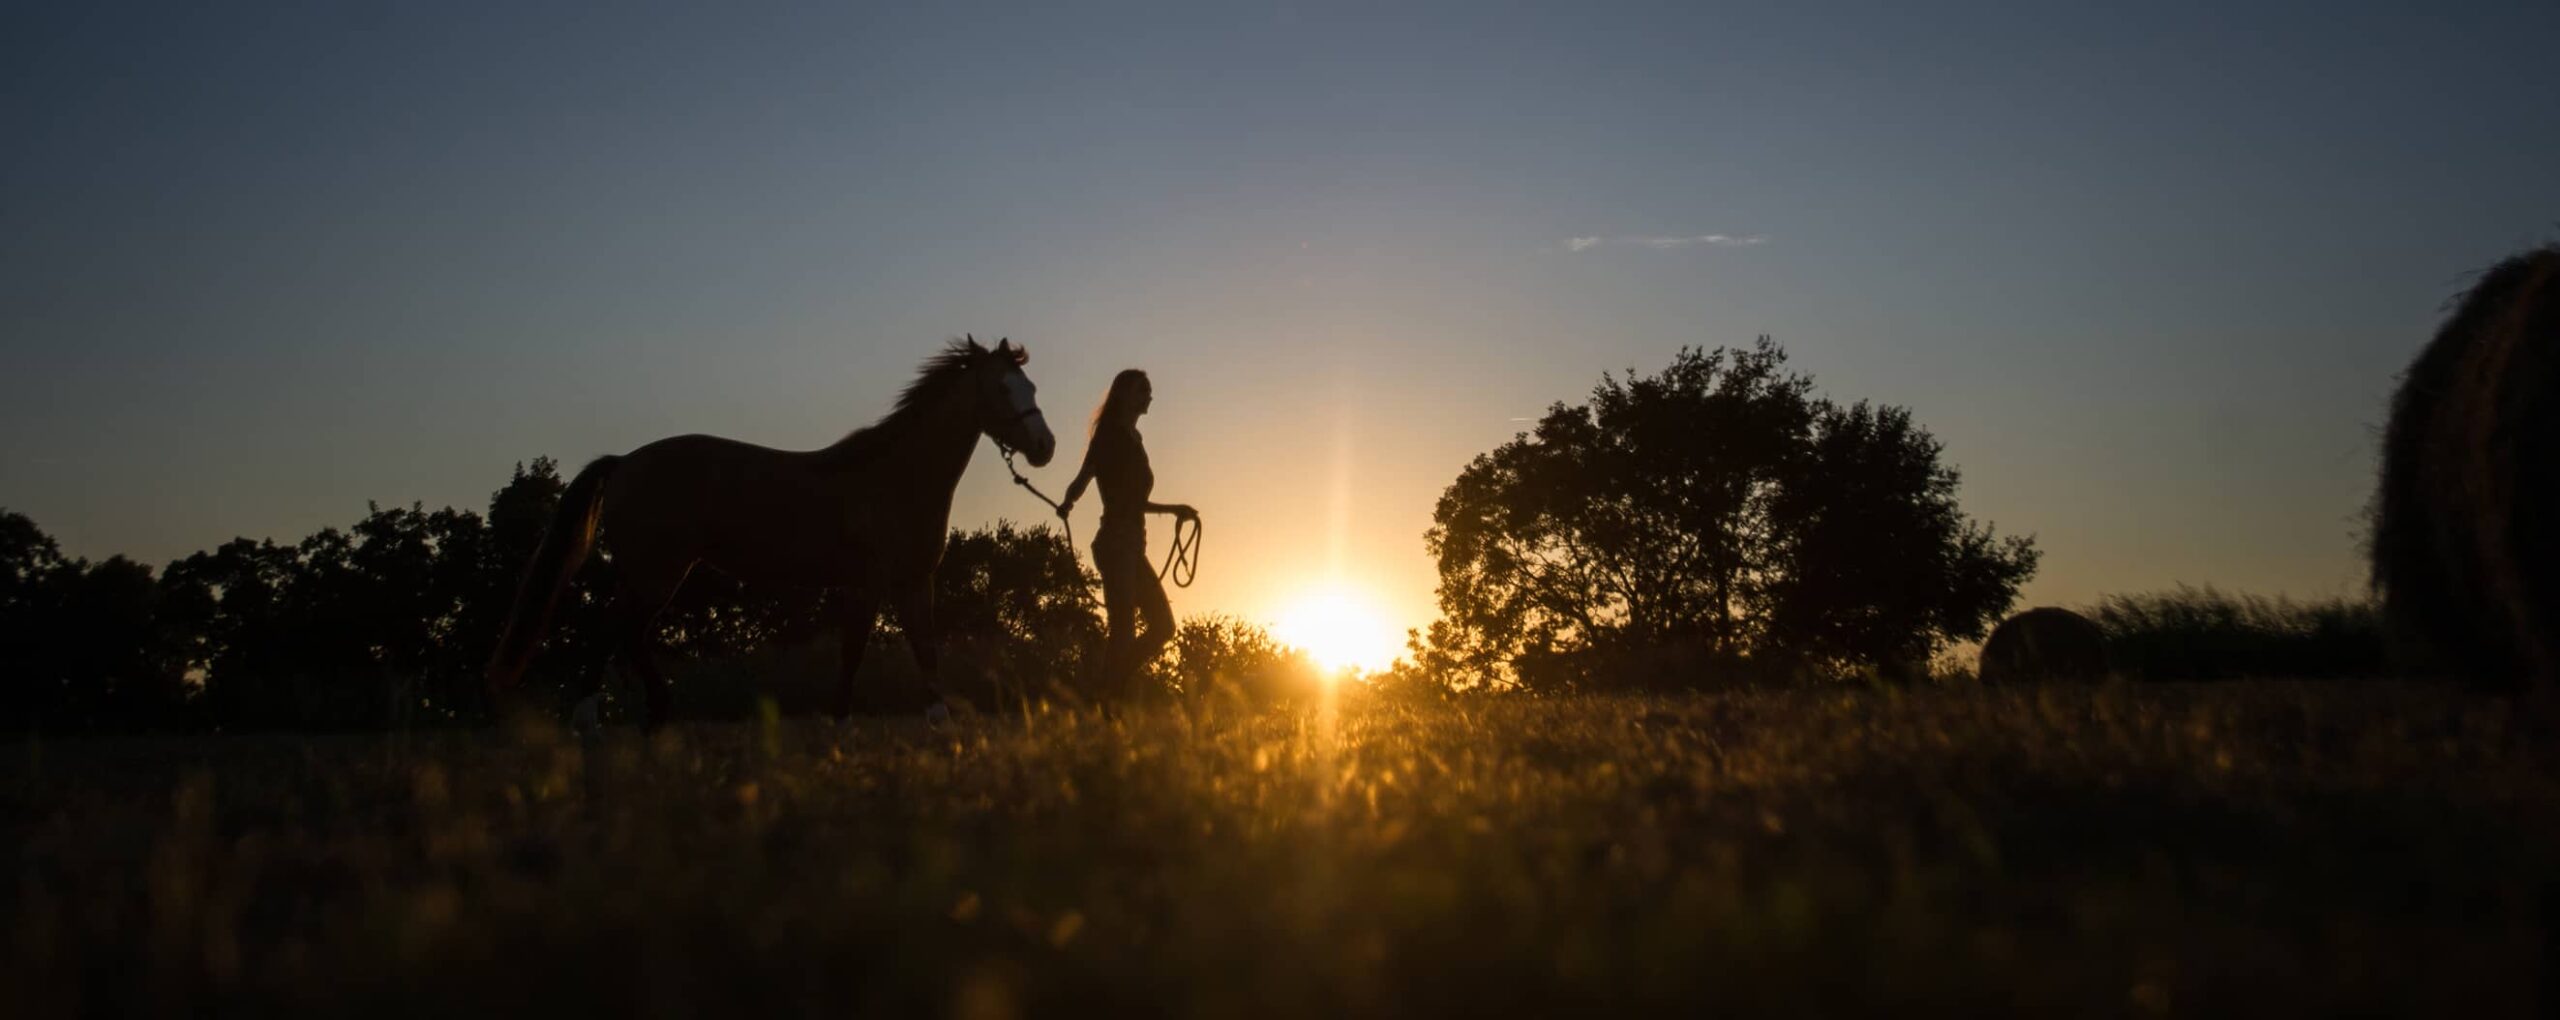 Equine student walking holding a horse background sunset